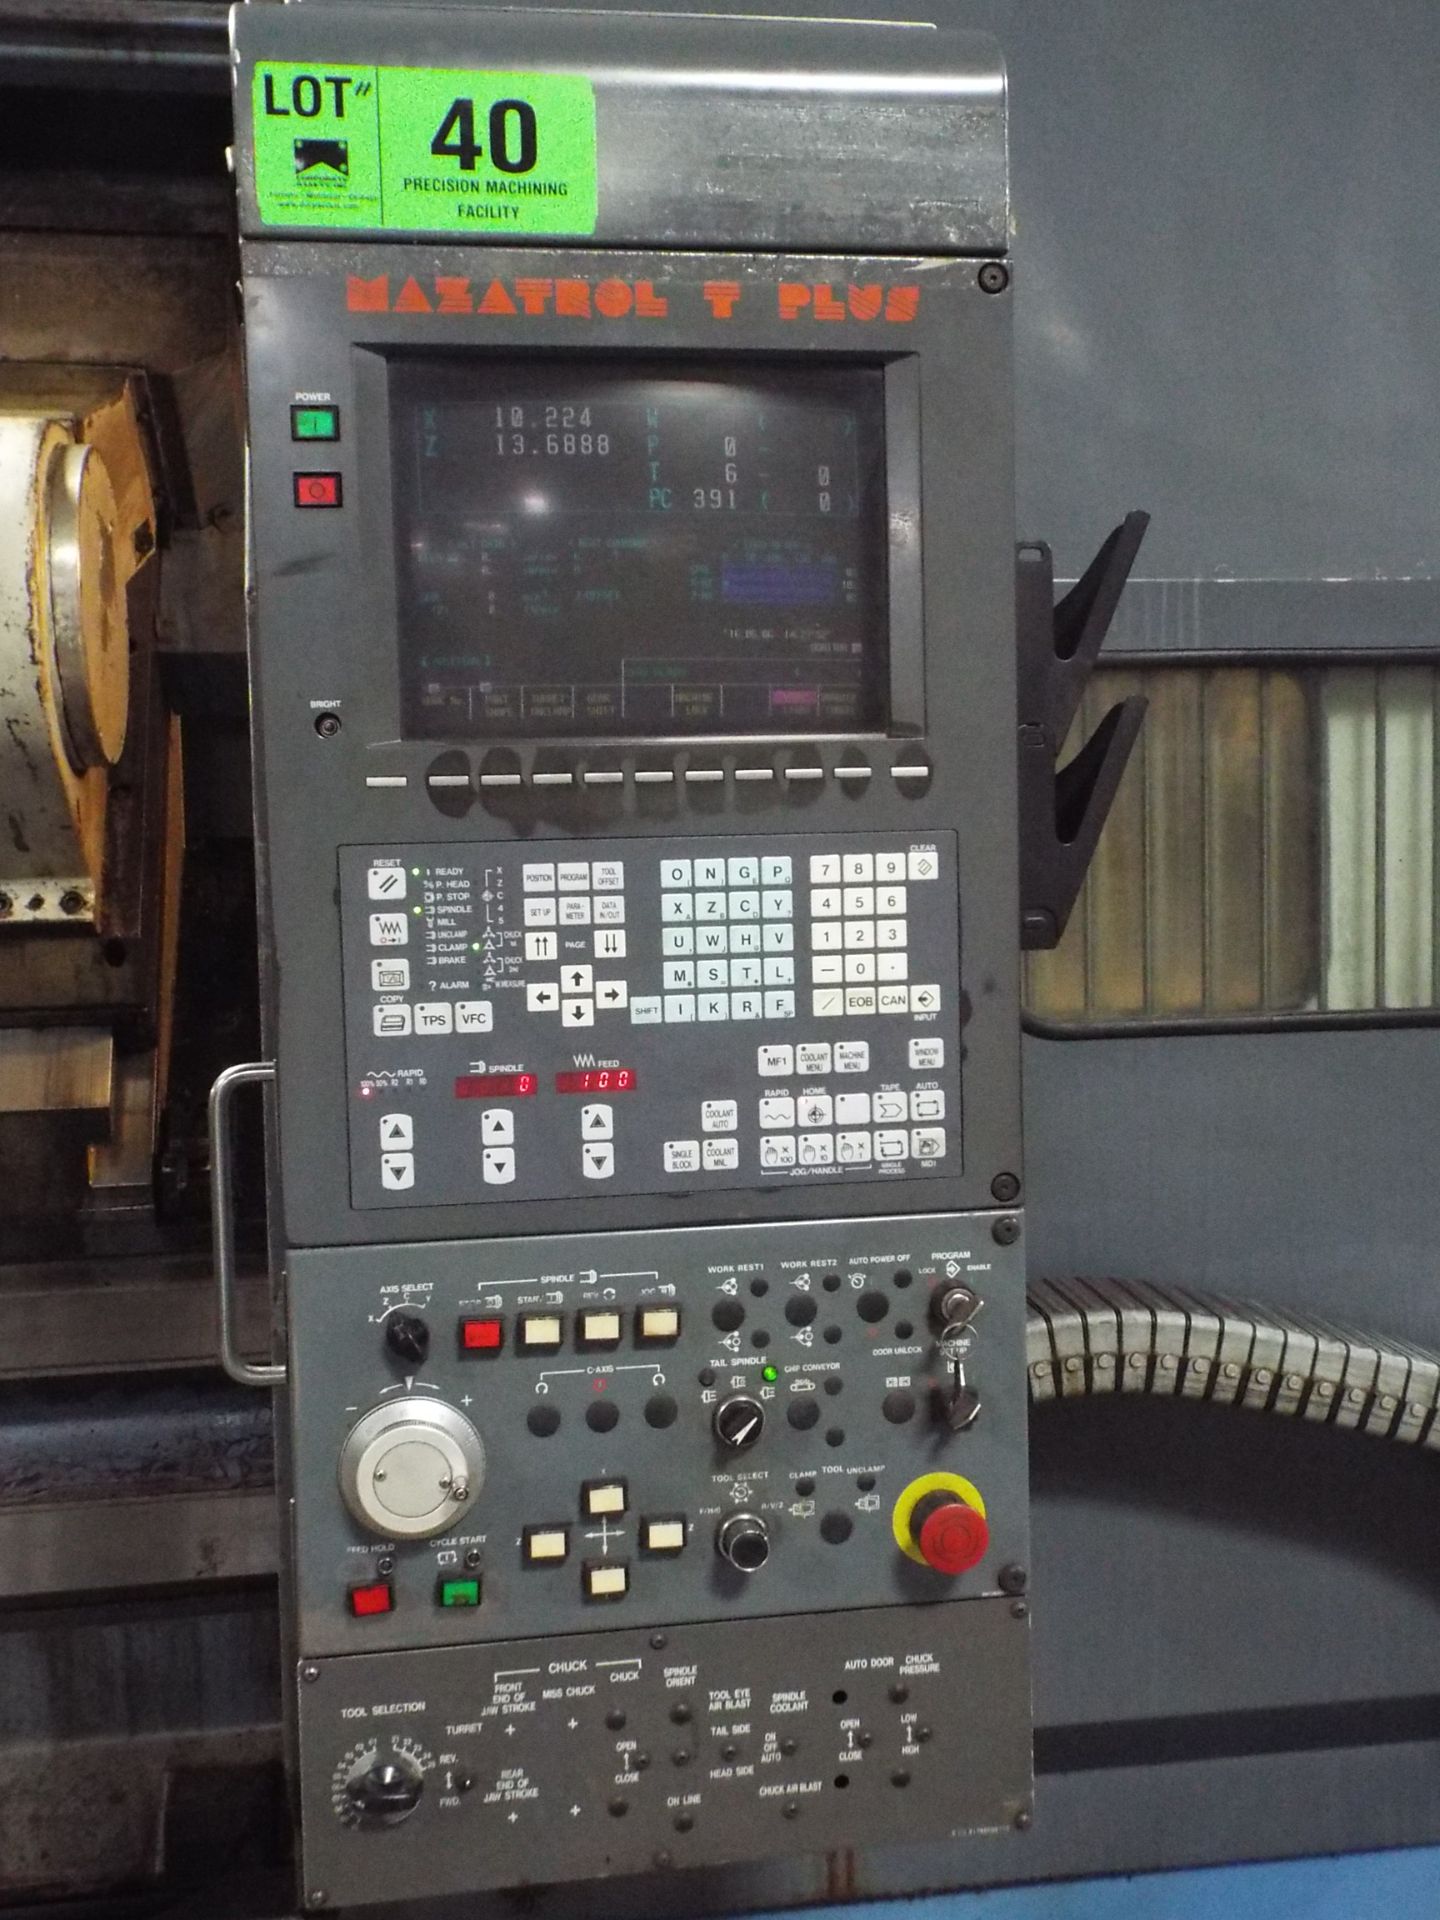 MAZAK SLANT TURN 50NX-2000U CNC TURNING CENTER WITH MAZATROL T-PLUS CNC CONTROL, 18" CHUCK, 31" - Image 8 of 9